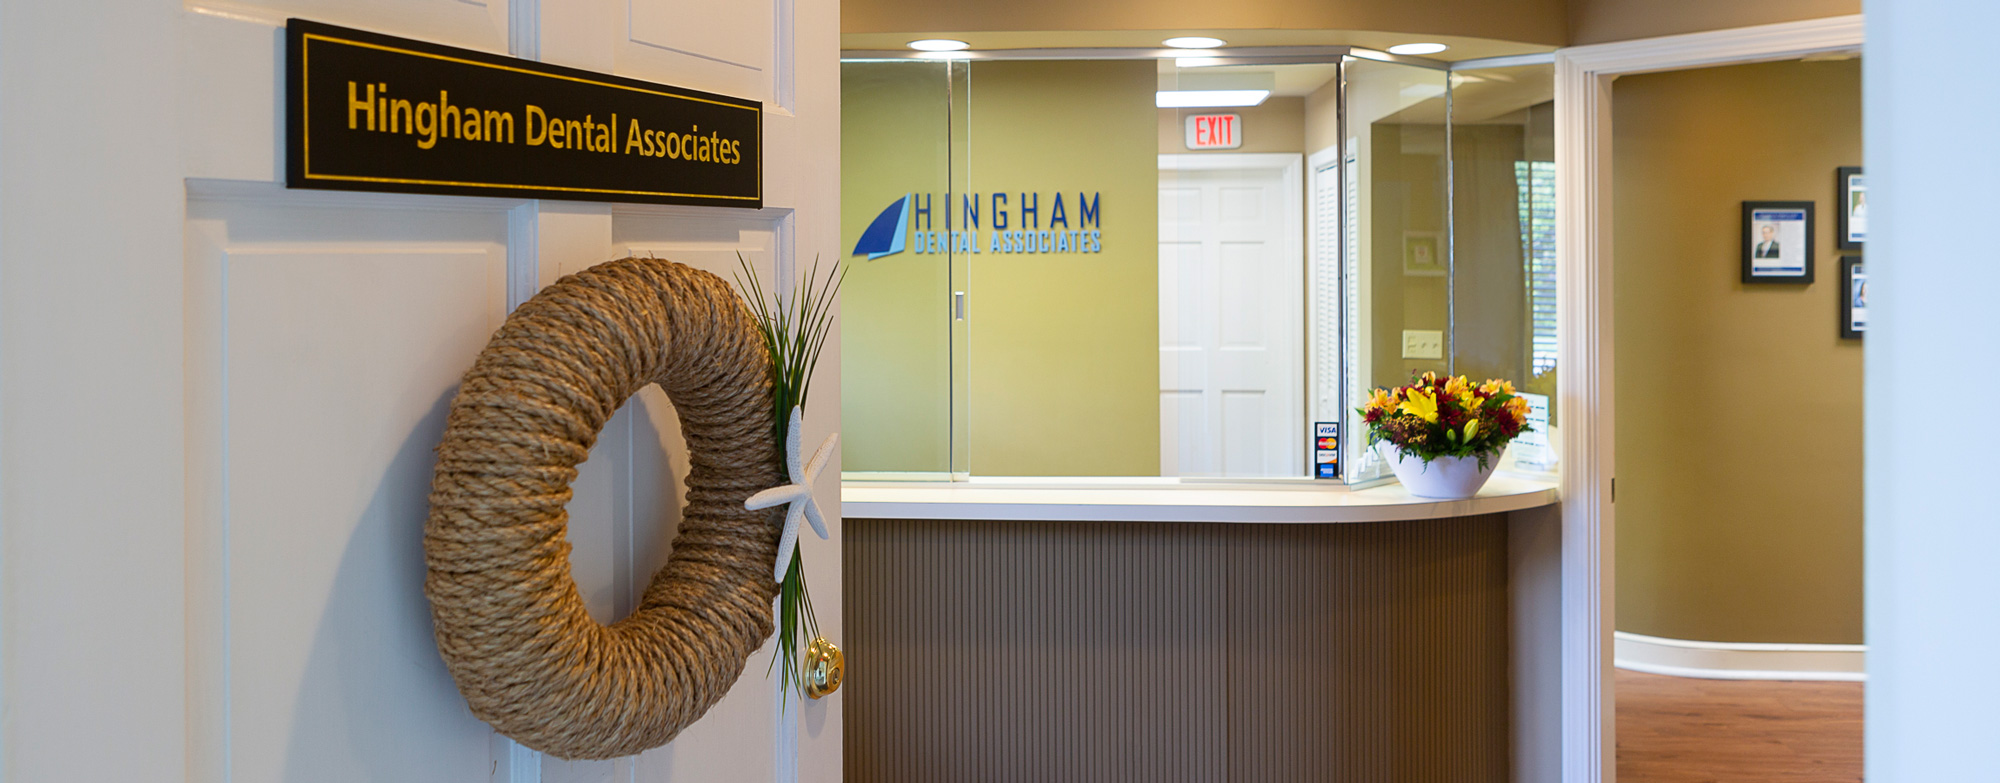 Your Visit to Hingham Dental Associates